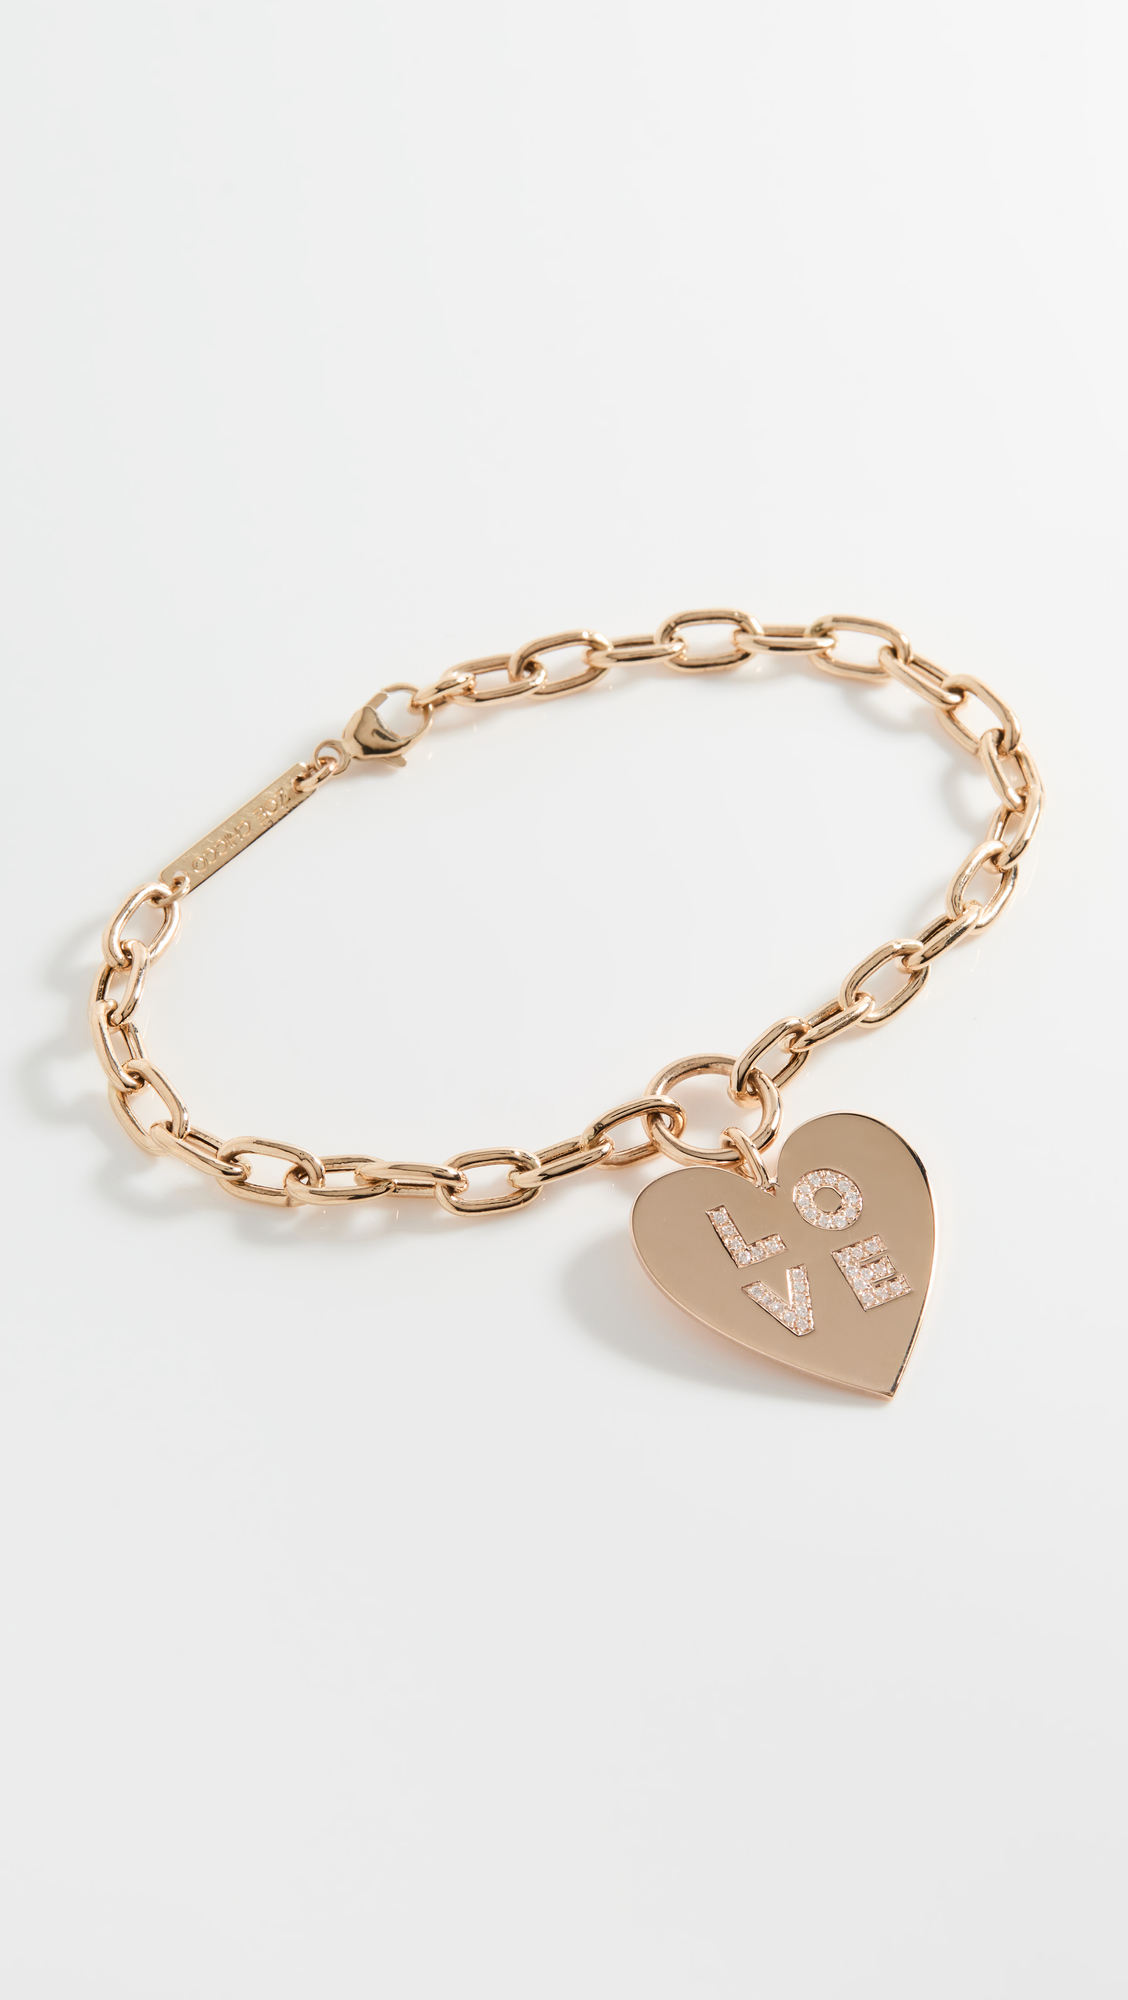 Zoe Chicco Heart Charm Love Chain Bracelet